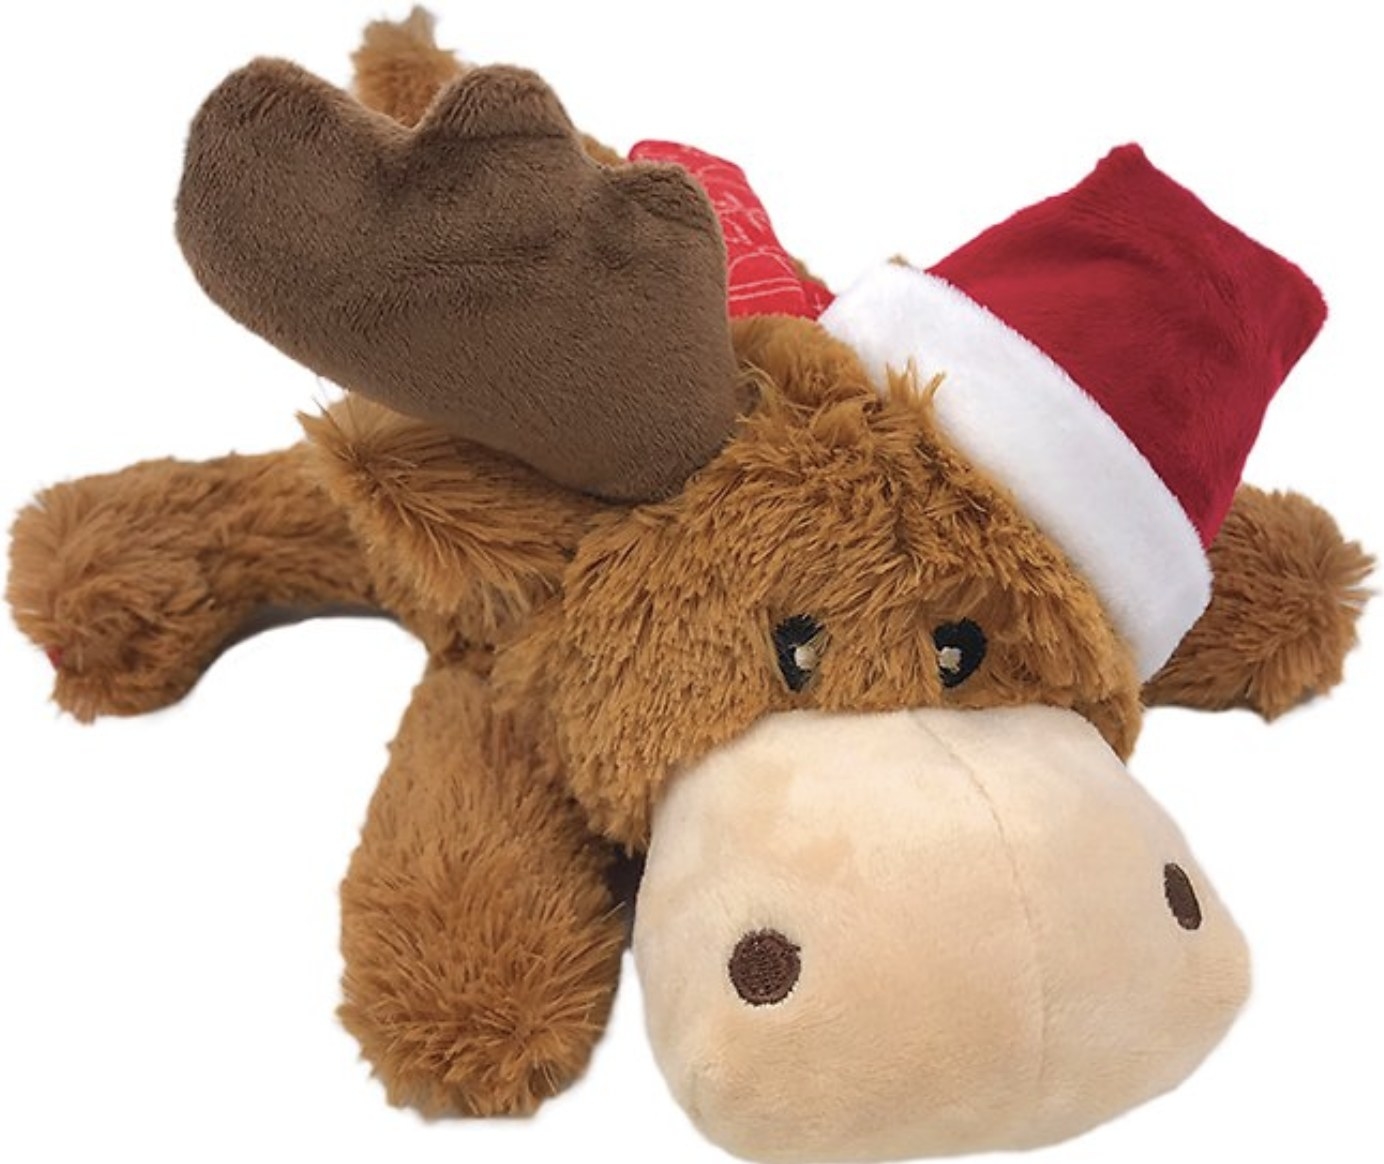 a reindeer stuffed toy wearing a santa hat